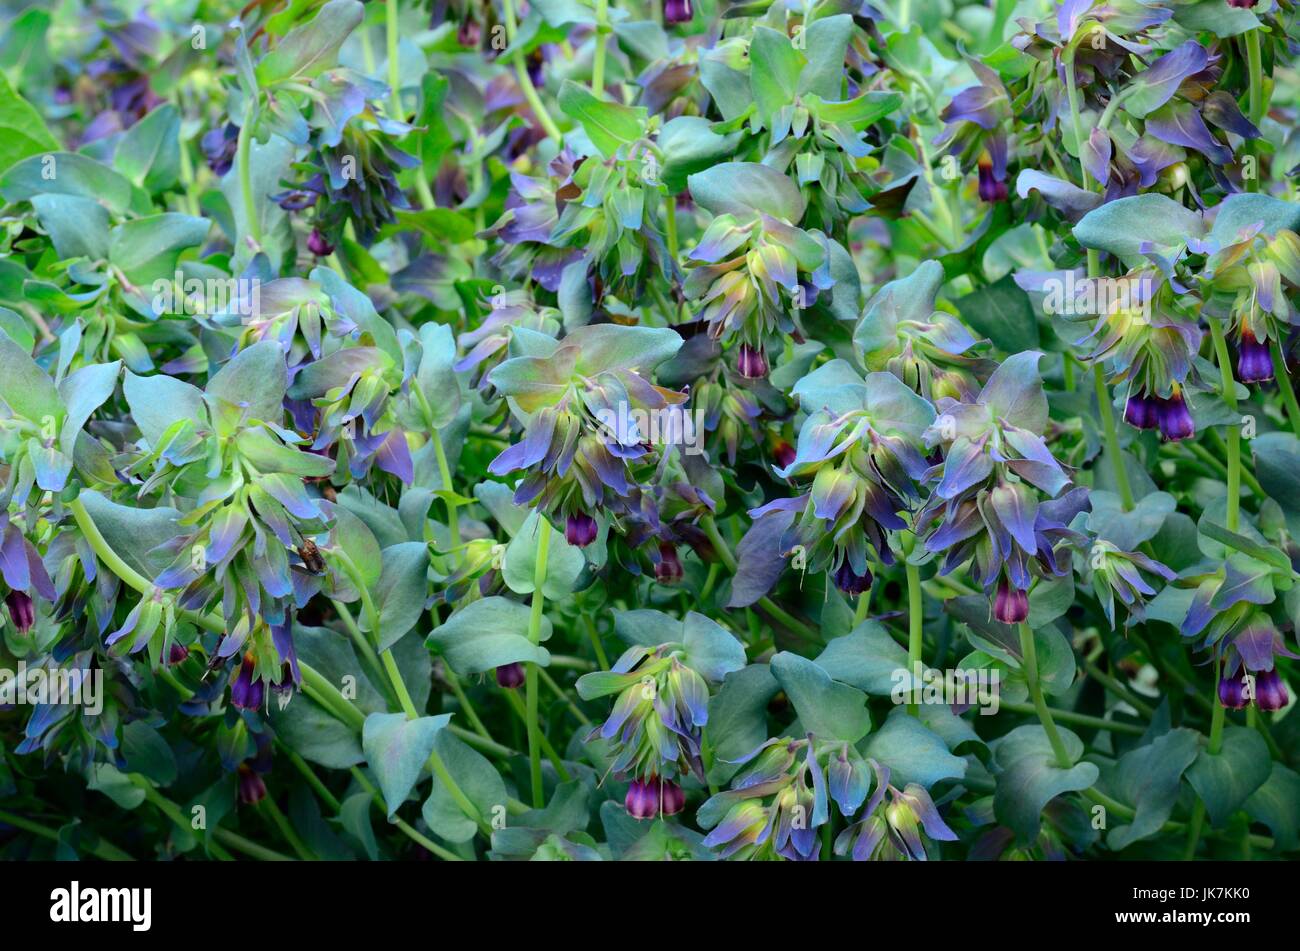 Cerinthe major Pururascens honeywort flowers Stock Photo